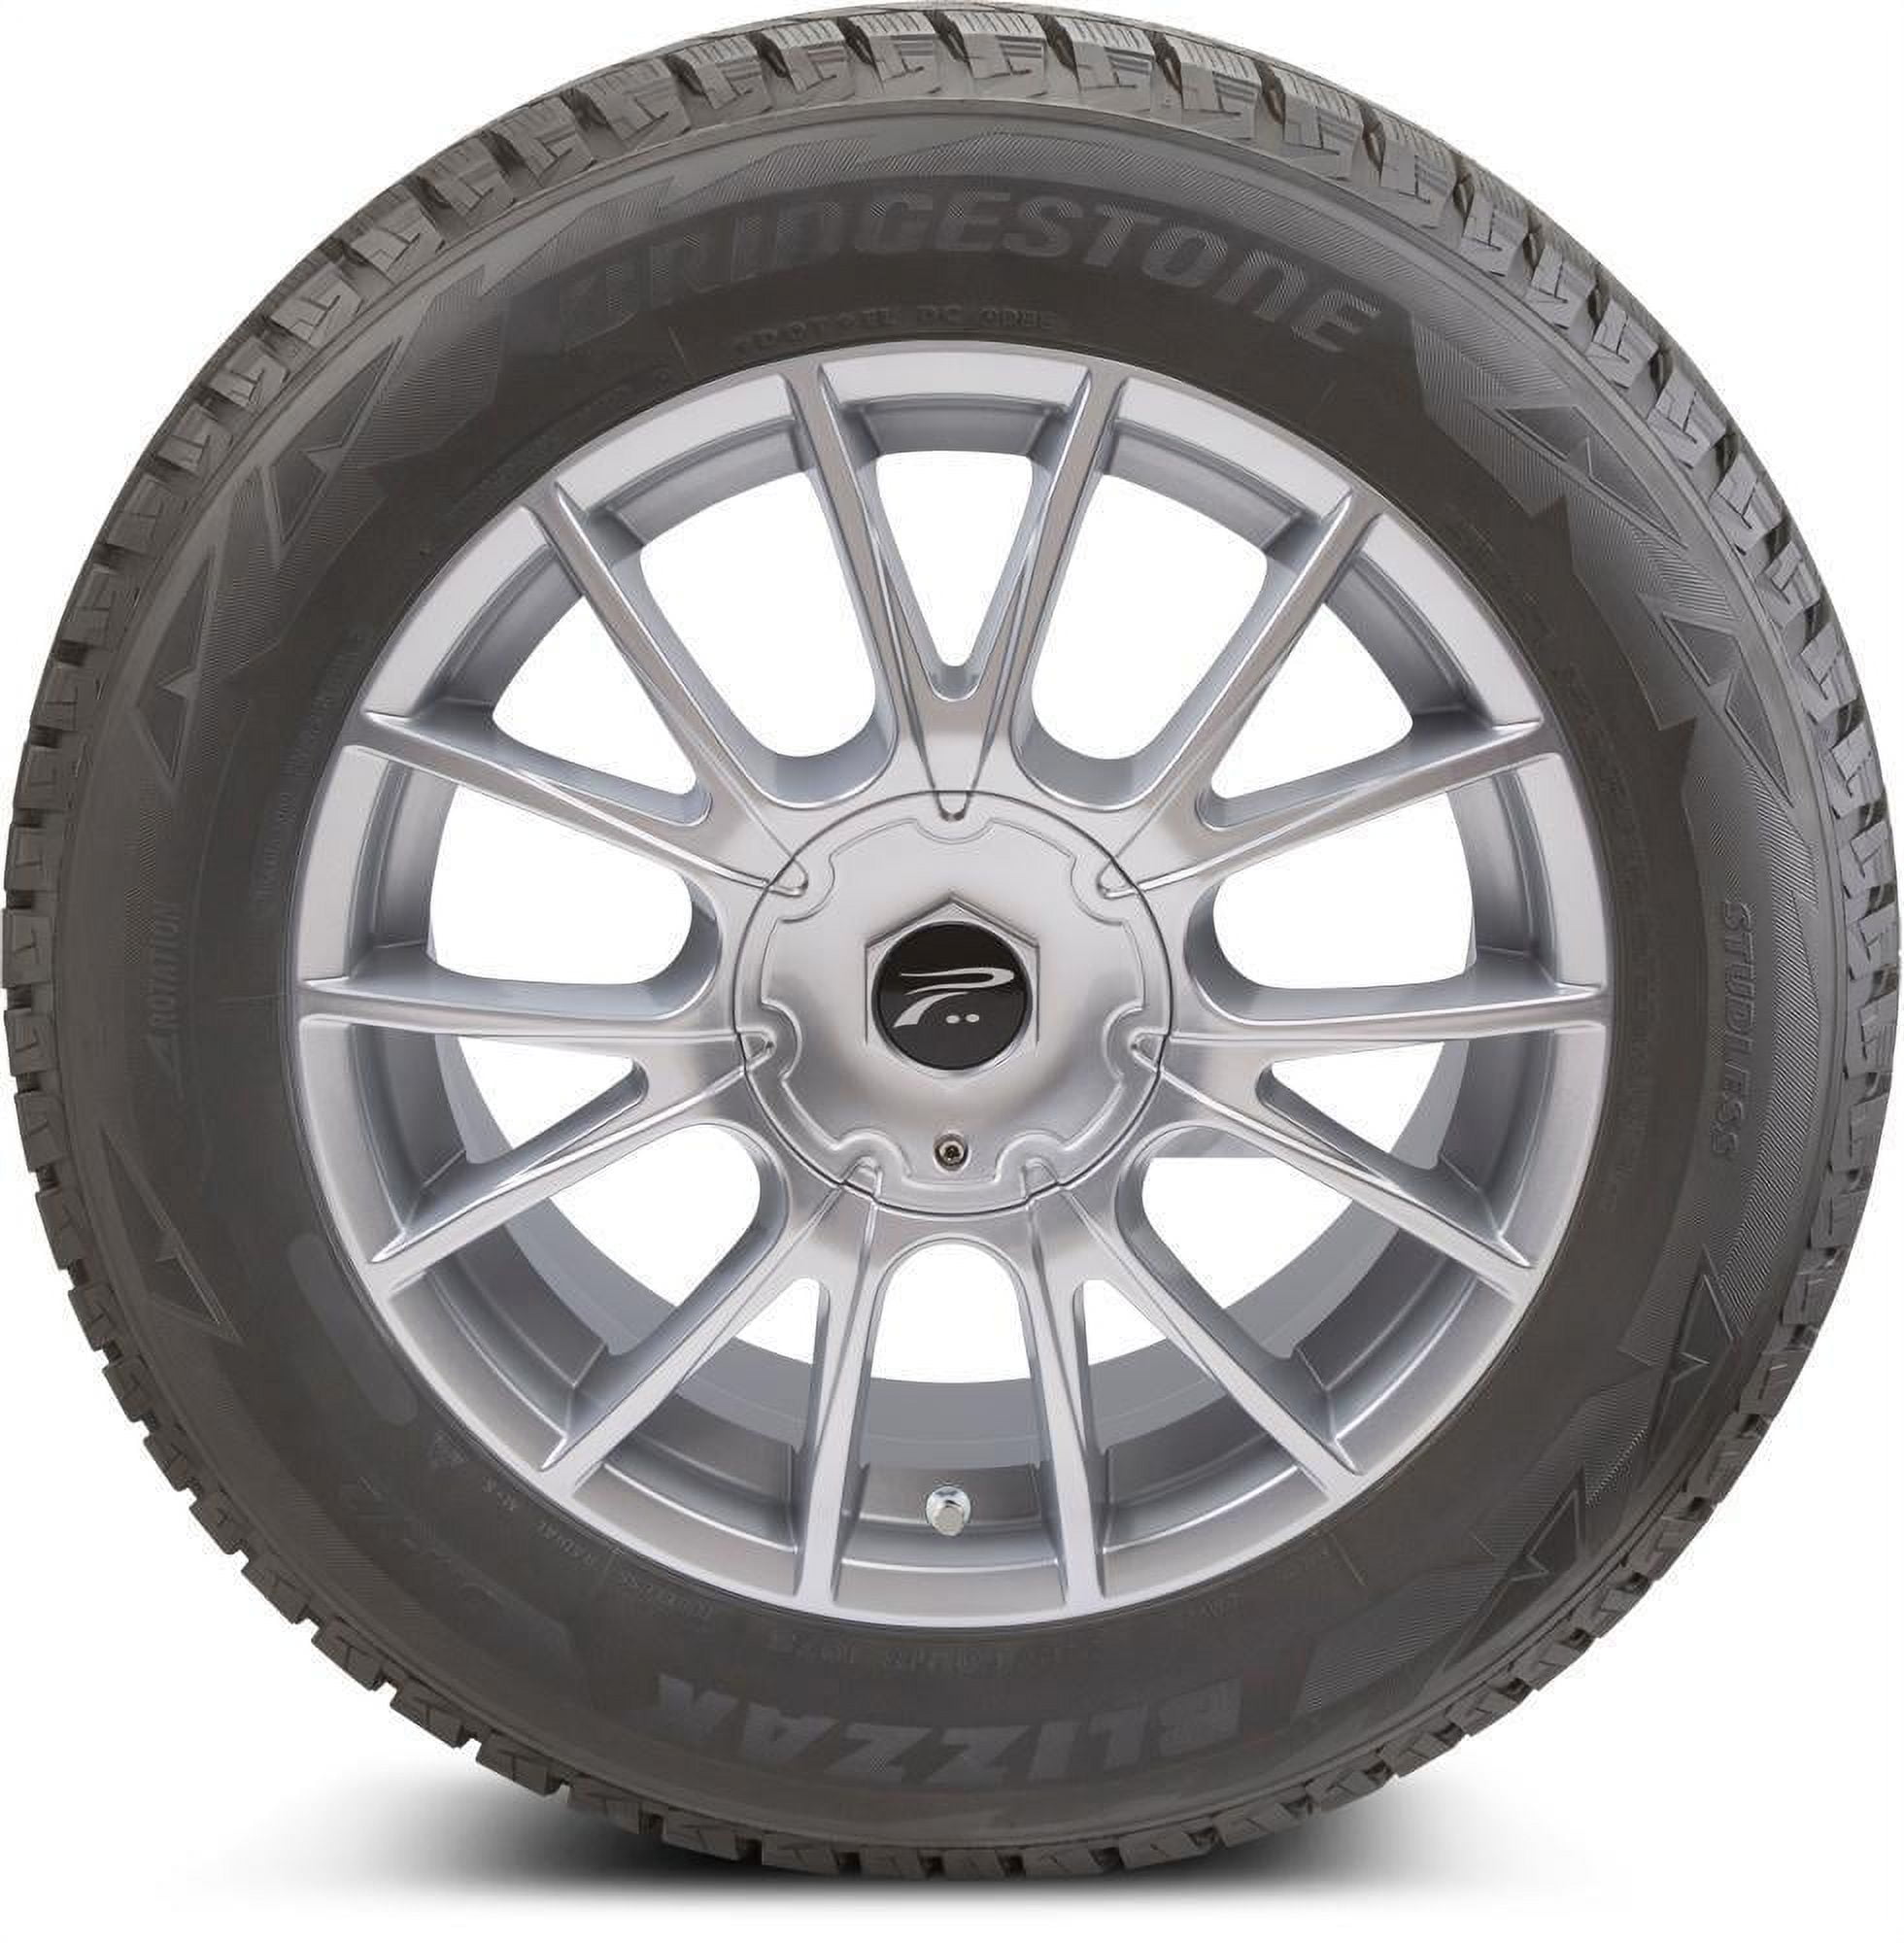 Bridgestone blizzak dm-v2 LT285/60R18 116R winter bsw tire